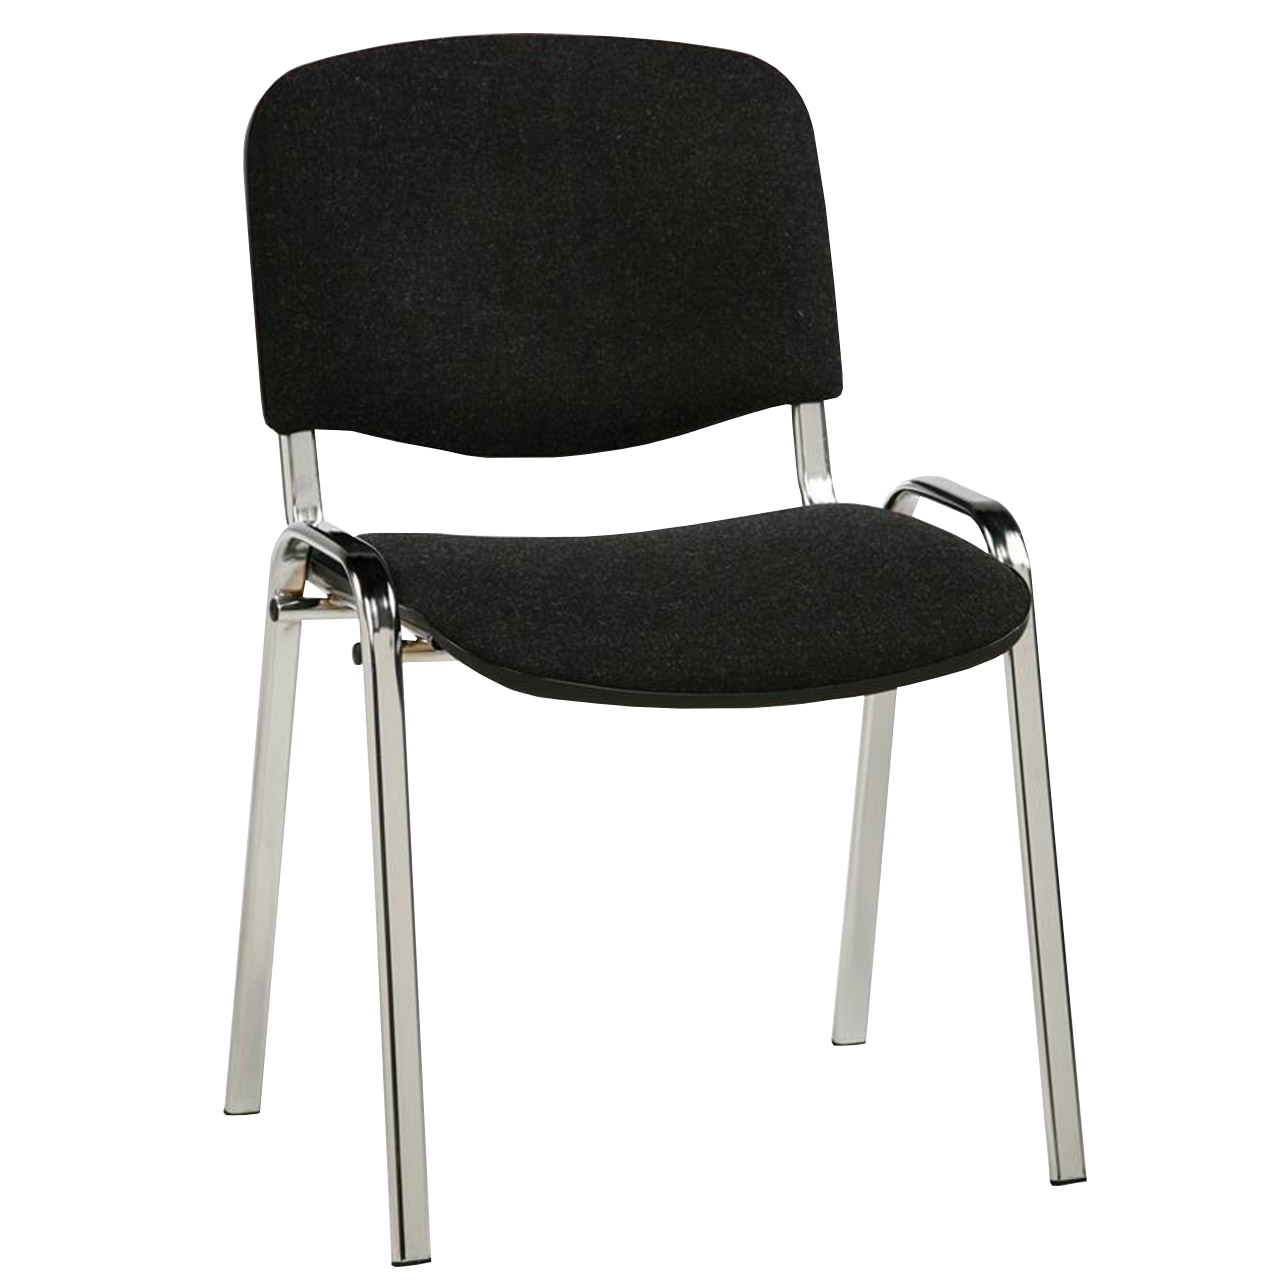 Стул офисный хромированный. Стул nowy styl ISO Chrome. Стул офисный easy Chair изо с-11 черный (ткань, металл черный). Стул изо хром Фабрикант черный. Стул ISO Chrome v18.